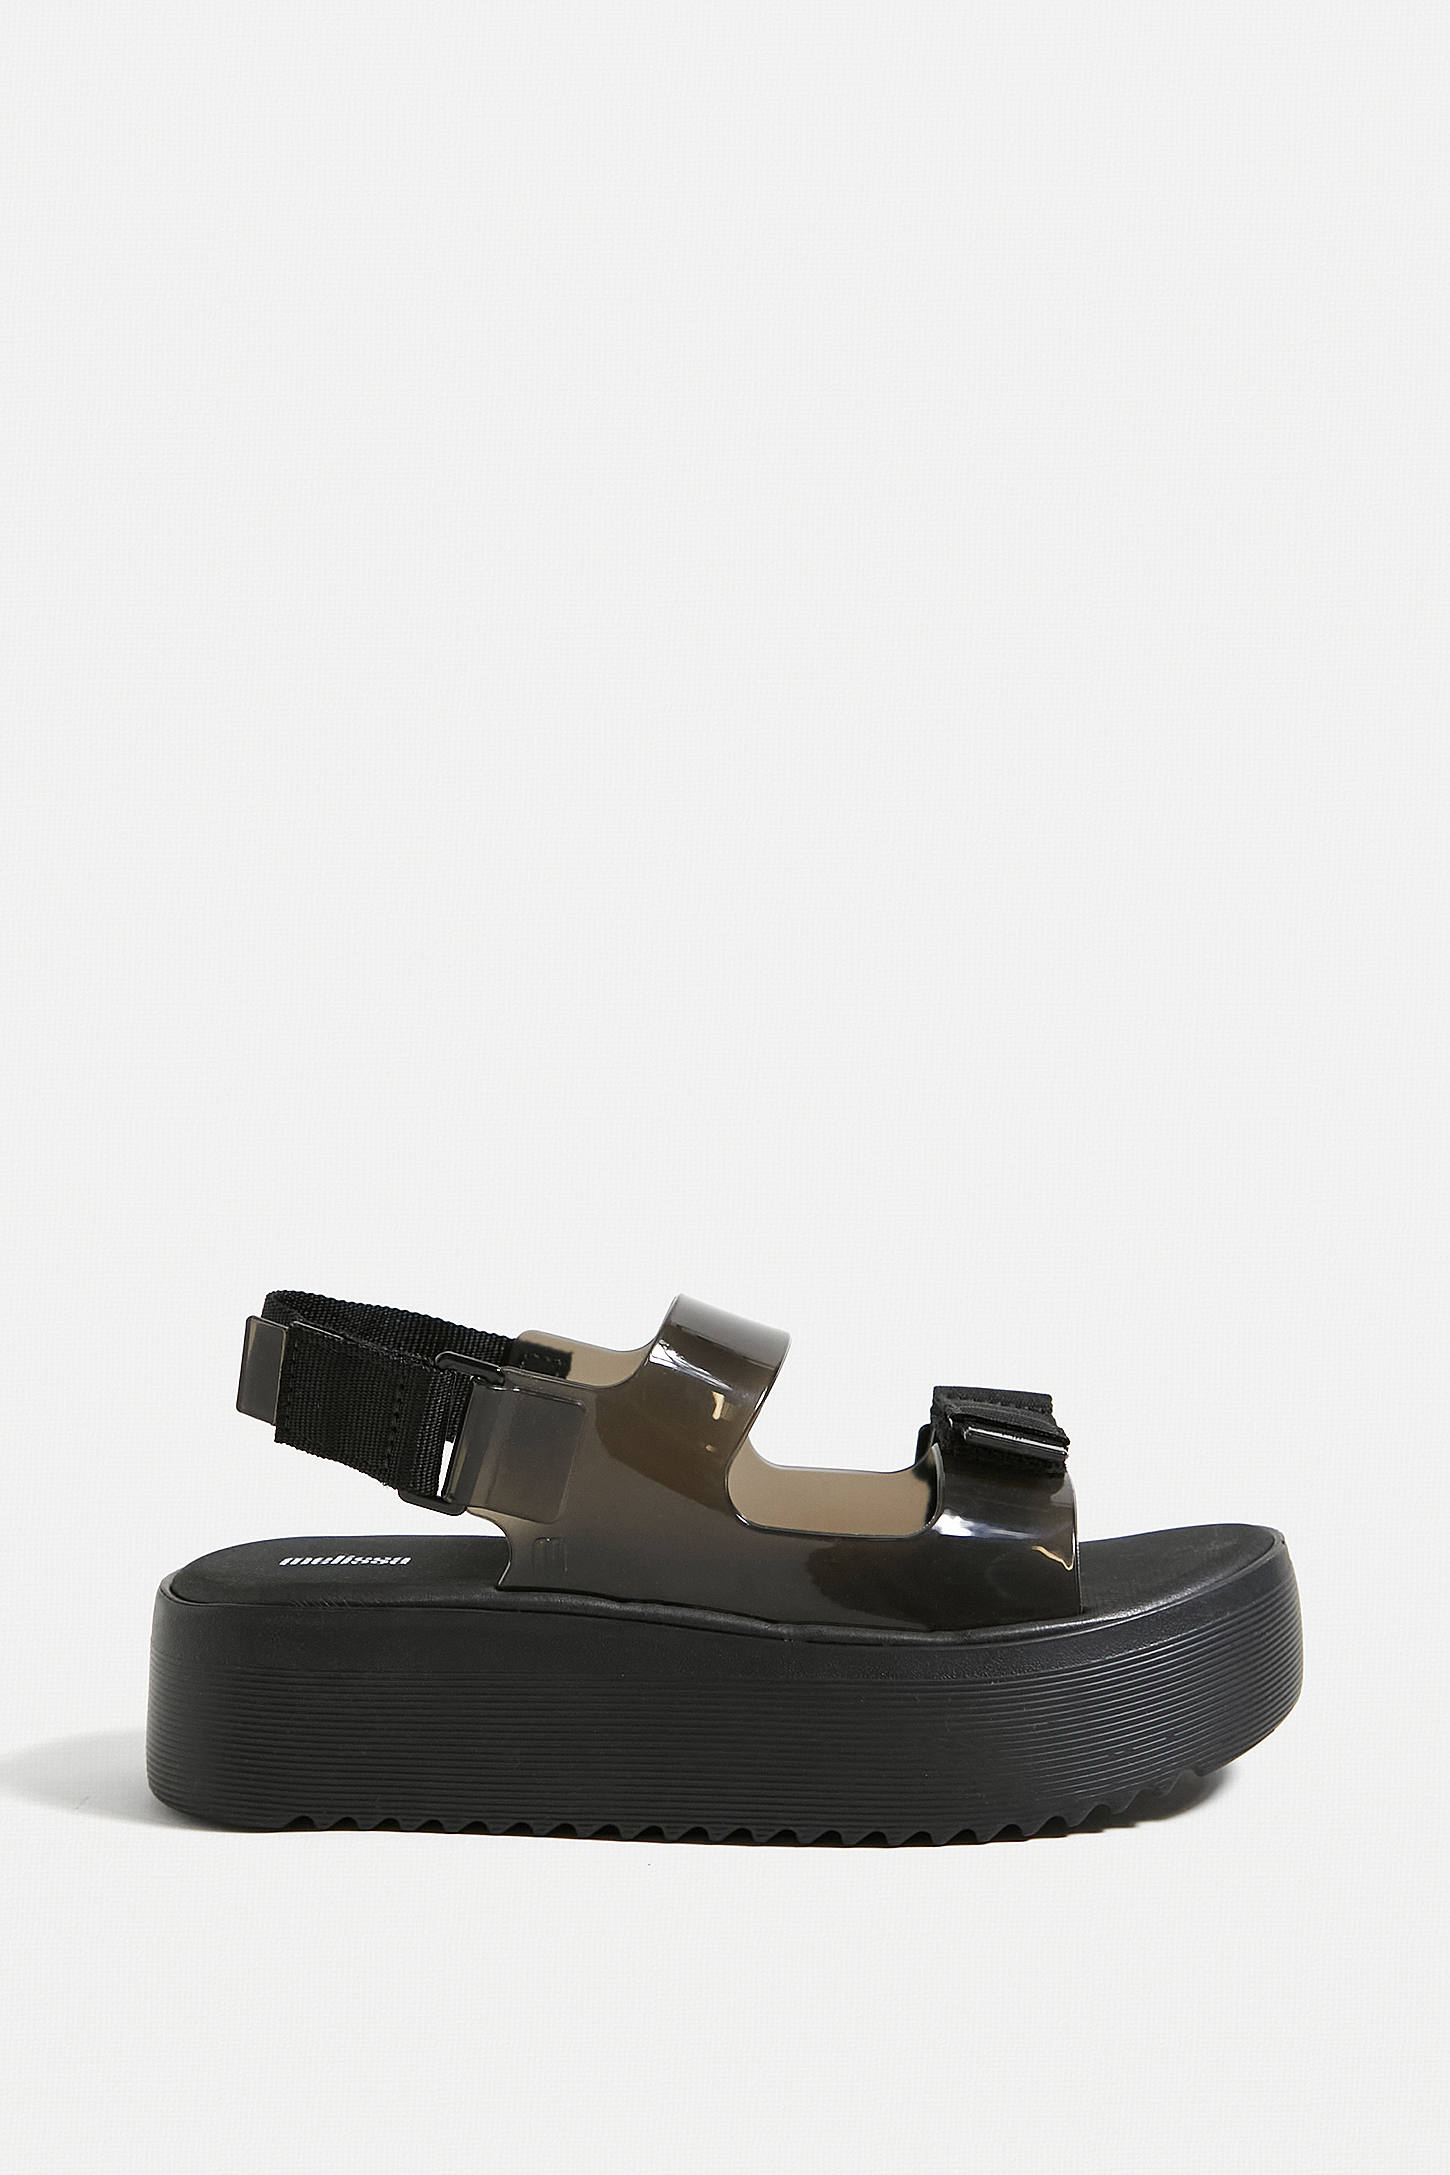 Melissa Black Brave Platform Sandals, Urban Outfitters